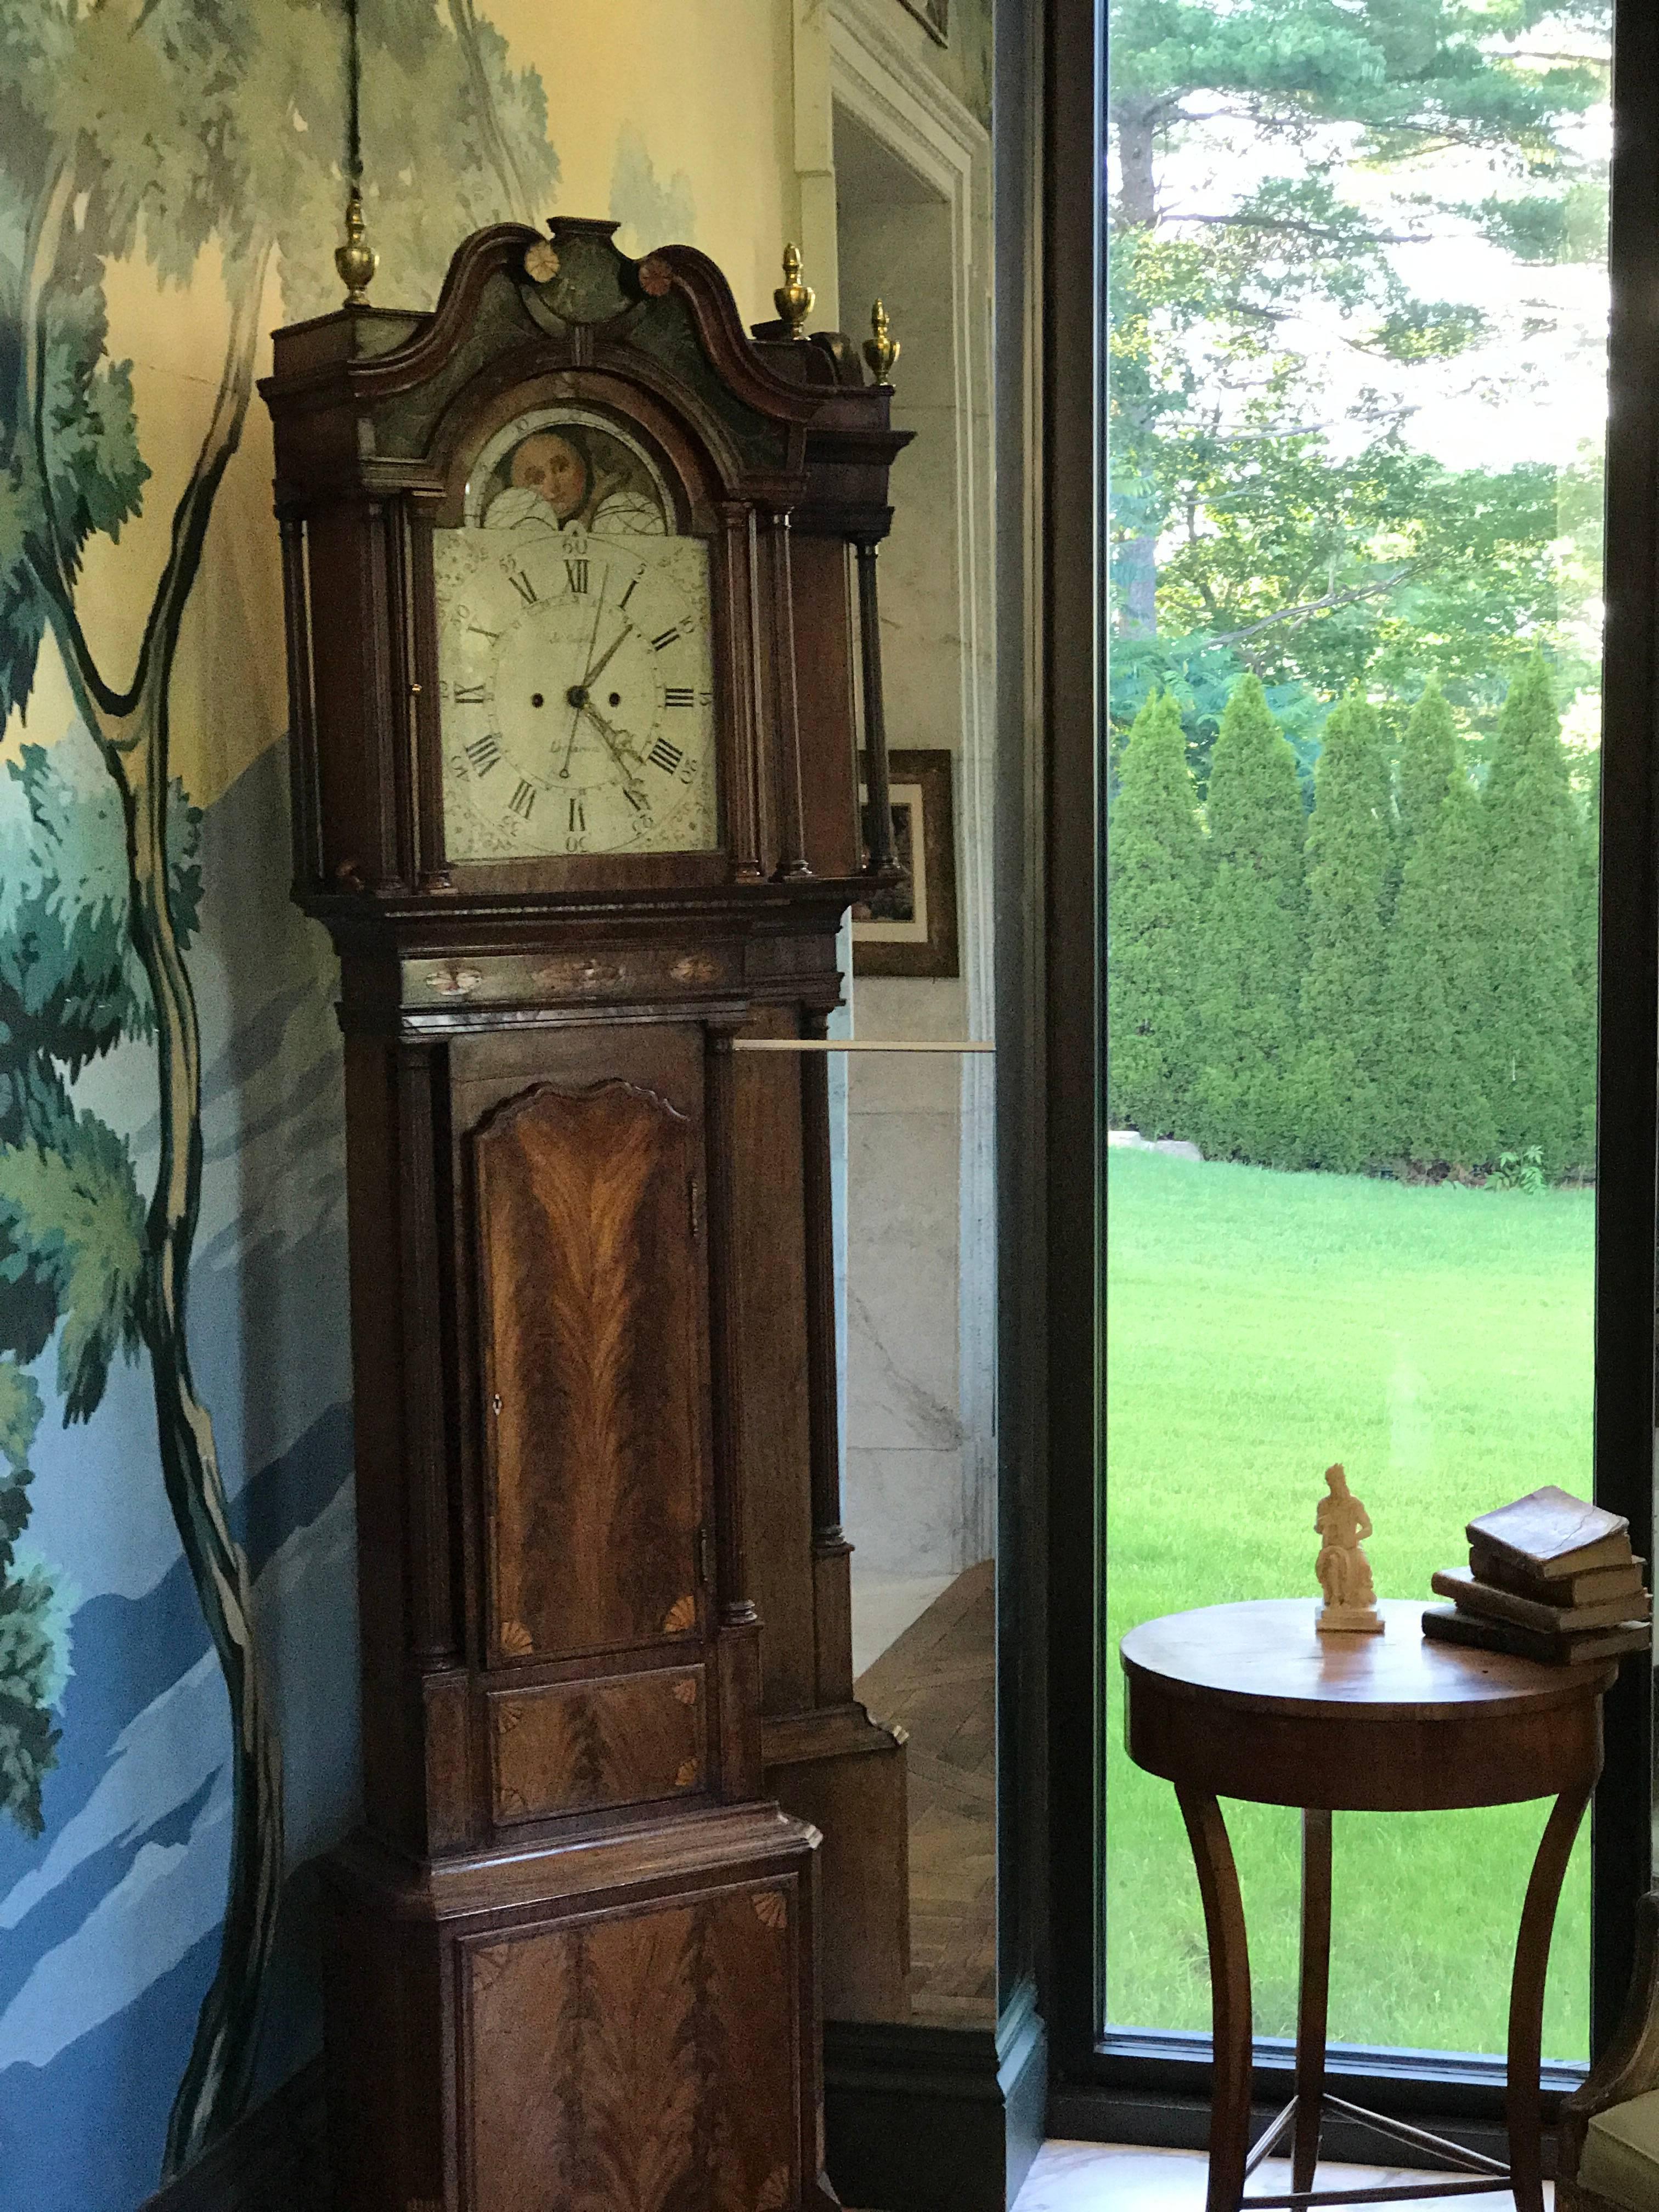 1800s grandfather clock